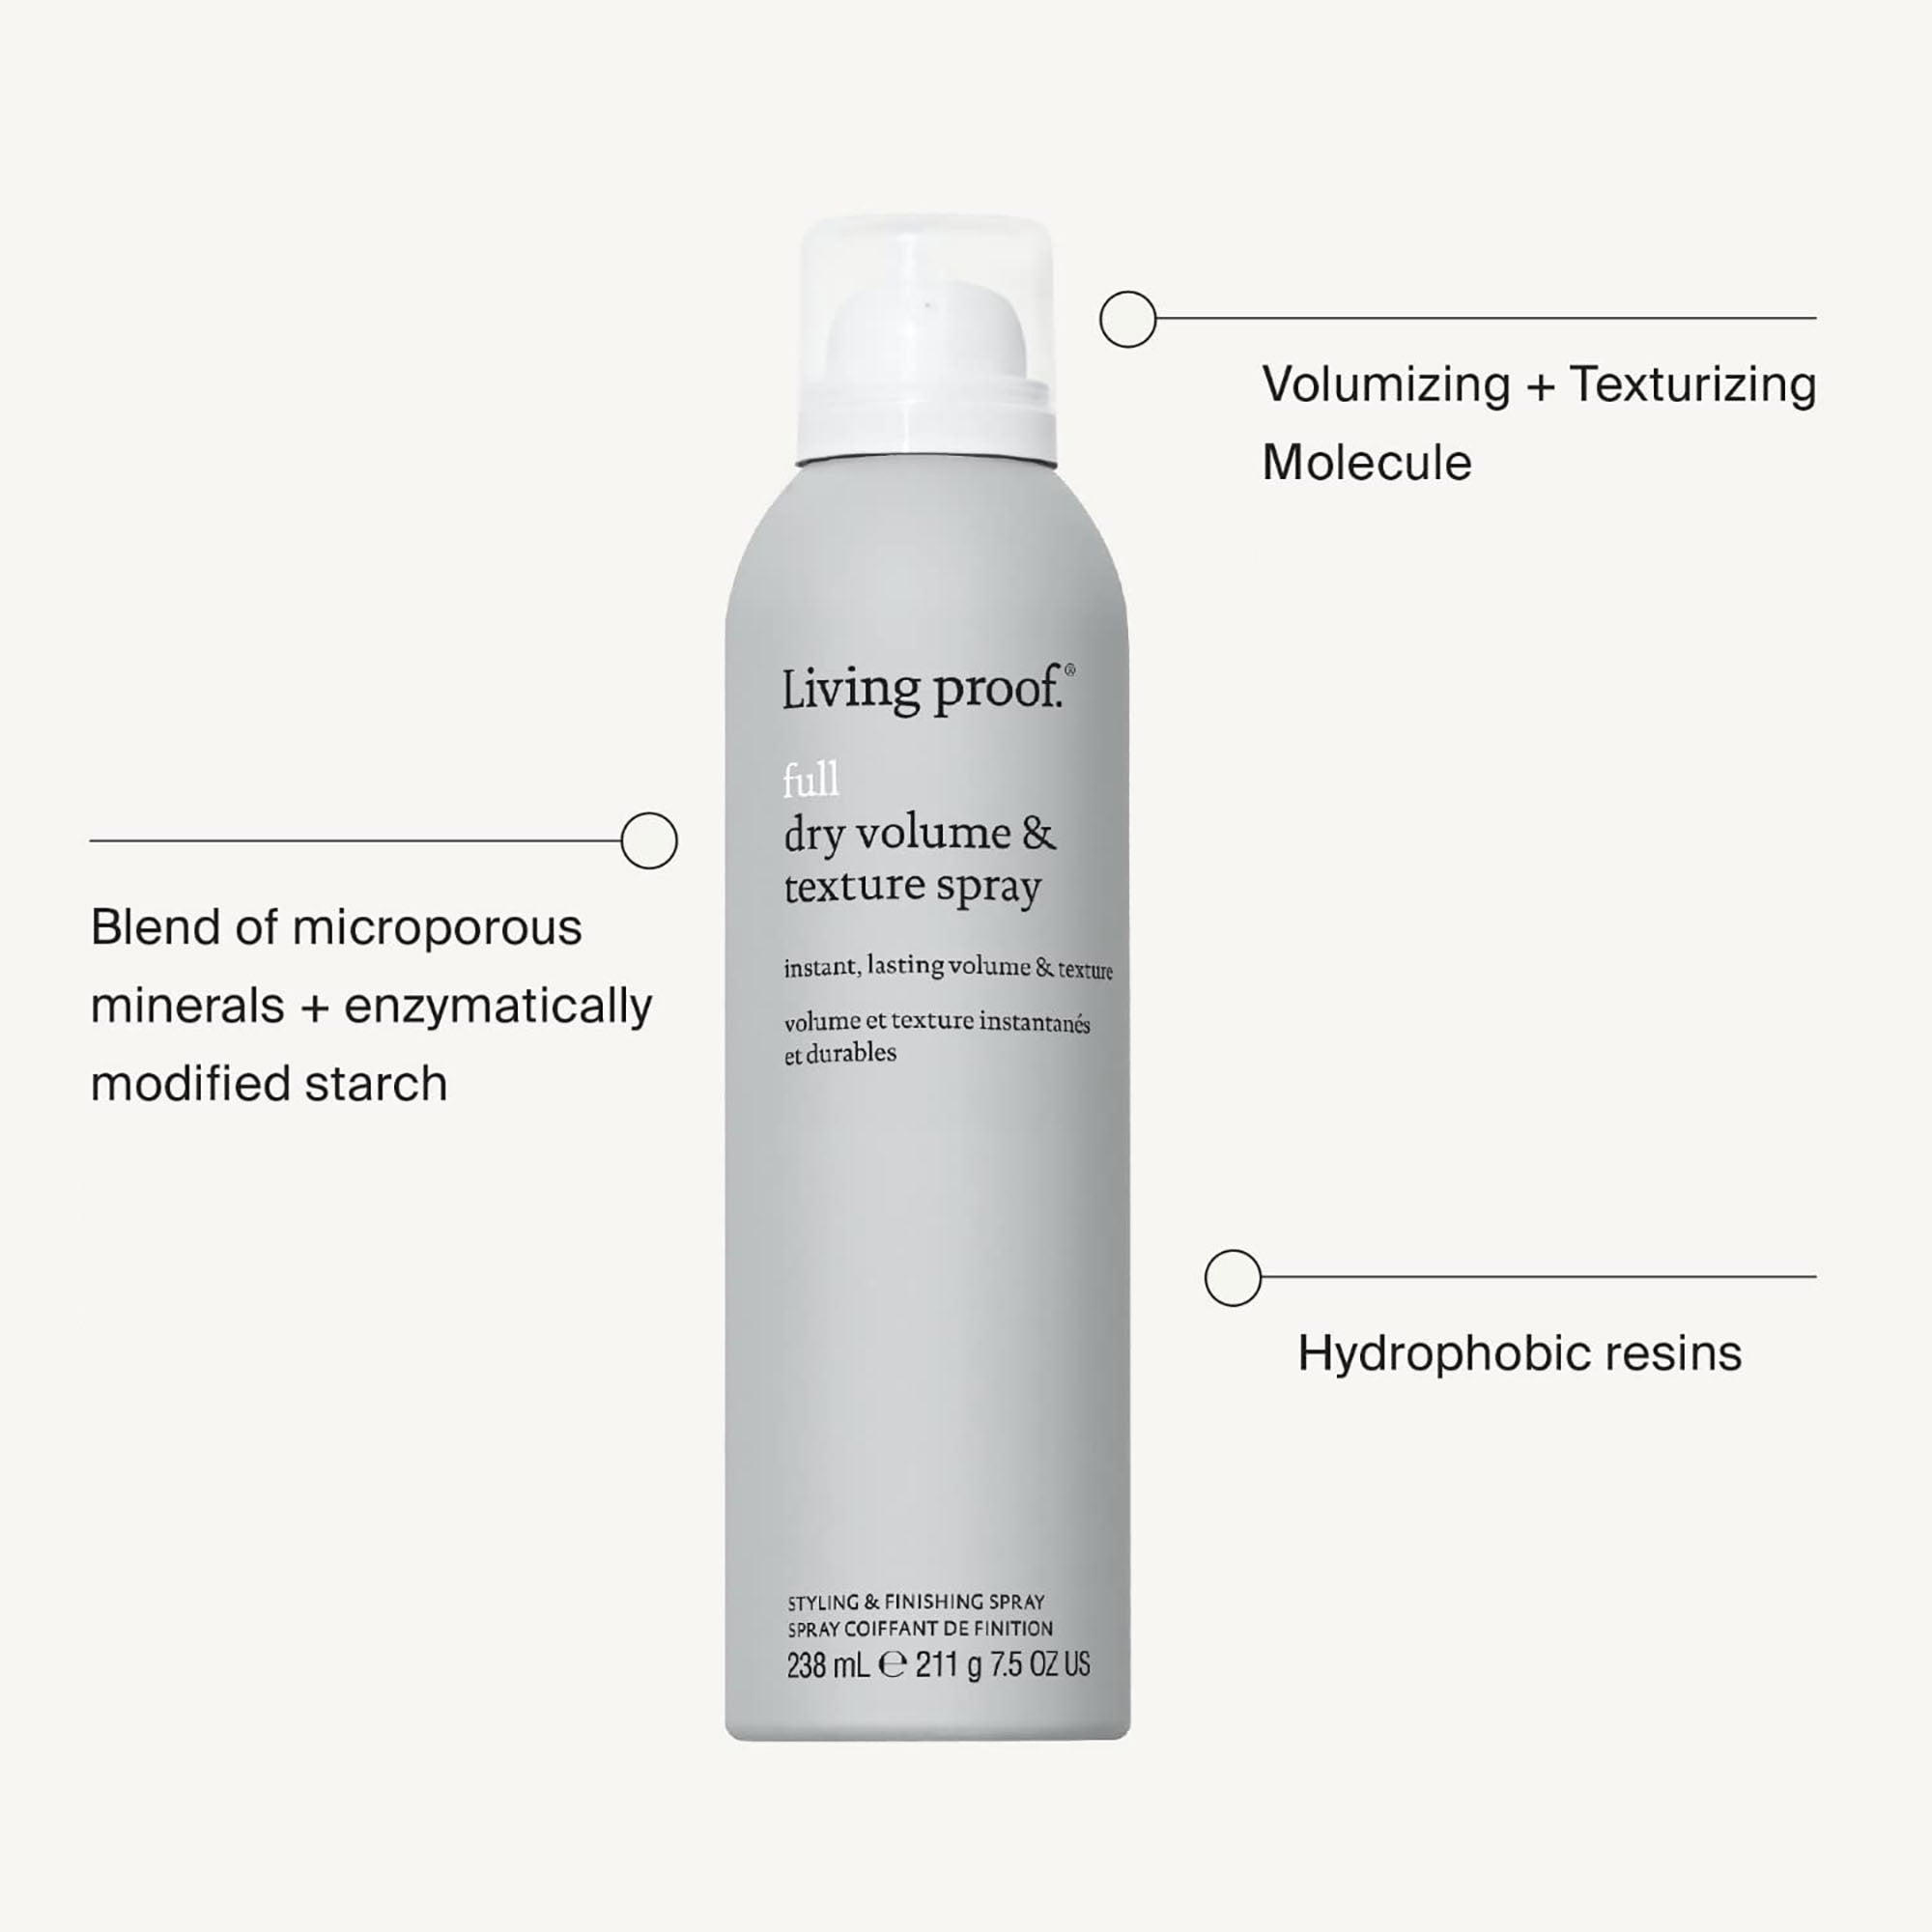 Living Proof Full Dry Volume & Texture Spray / 7.5OZ